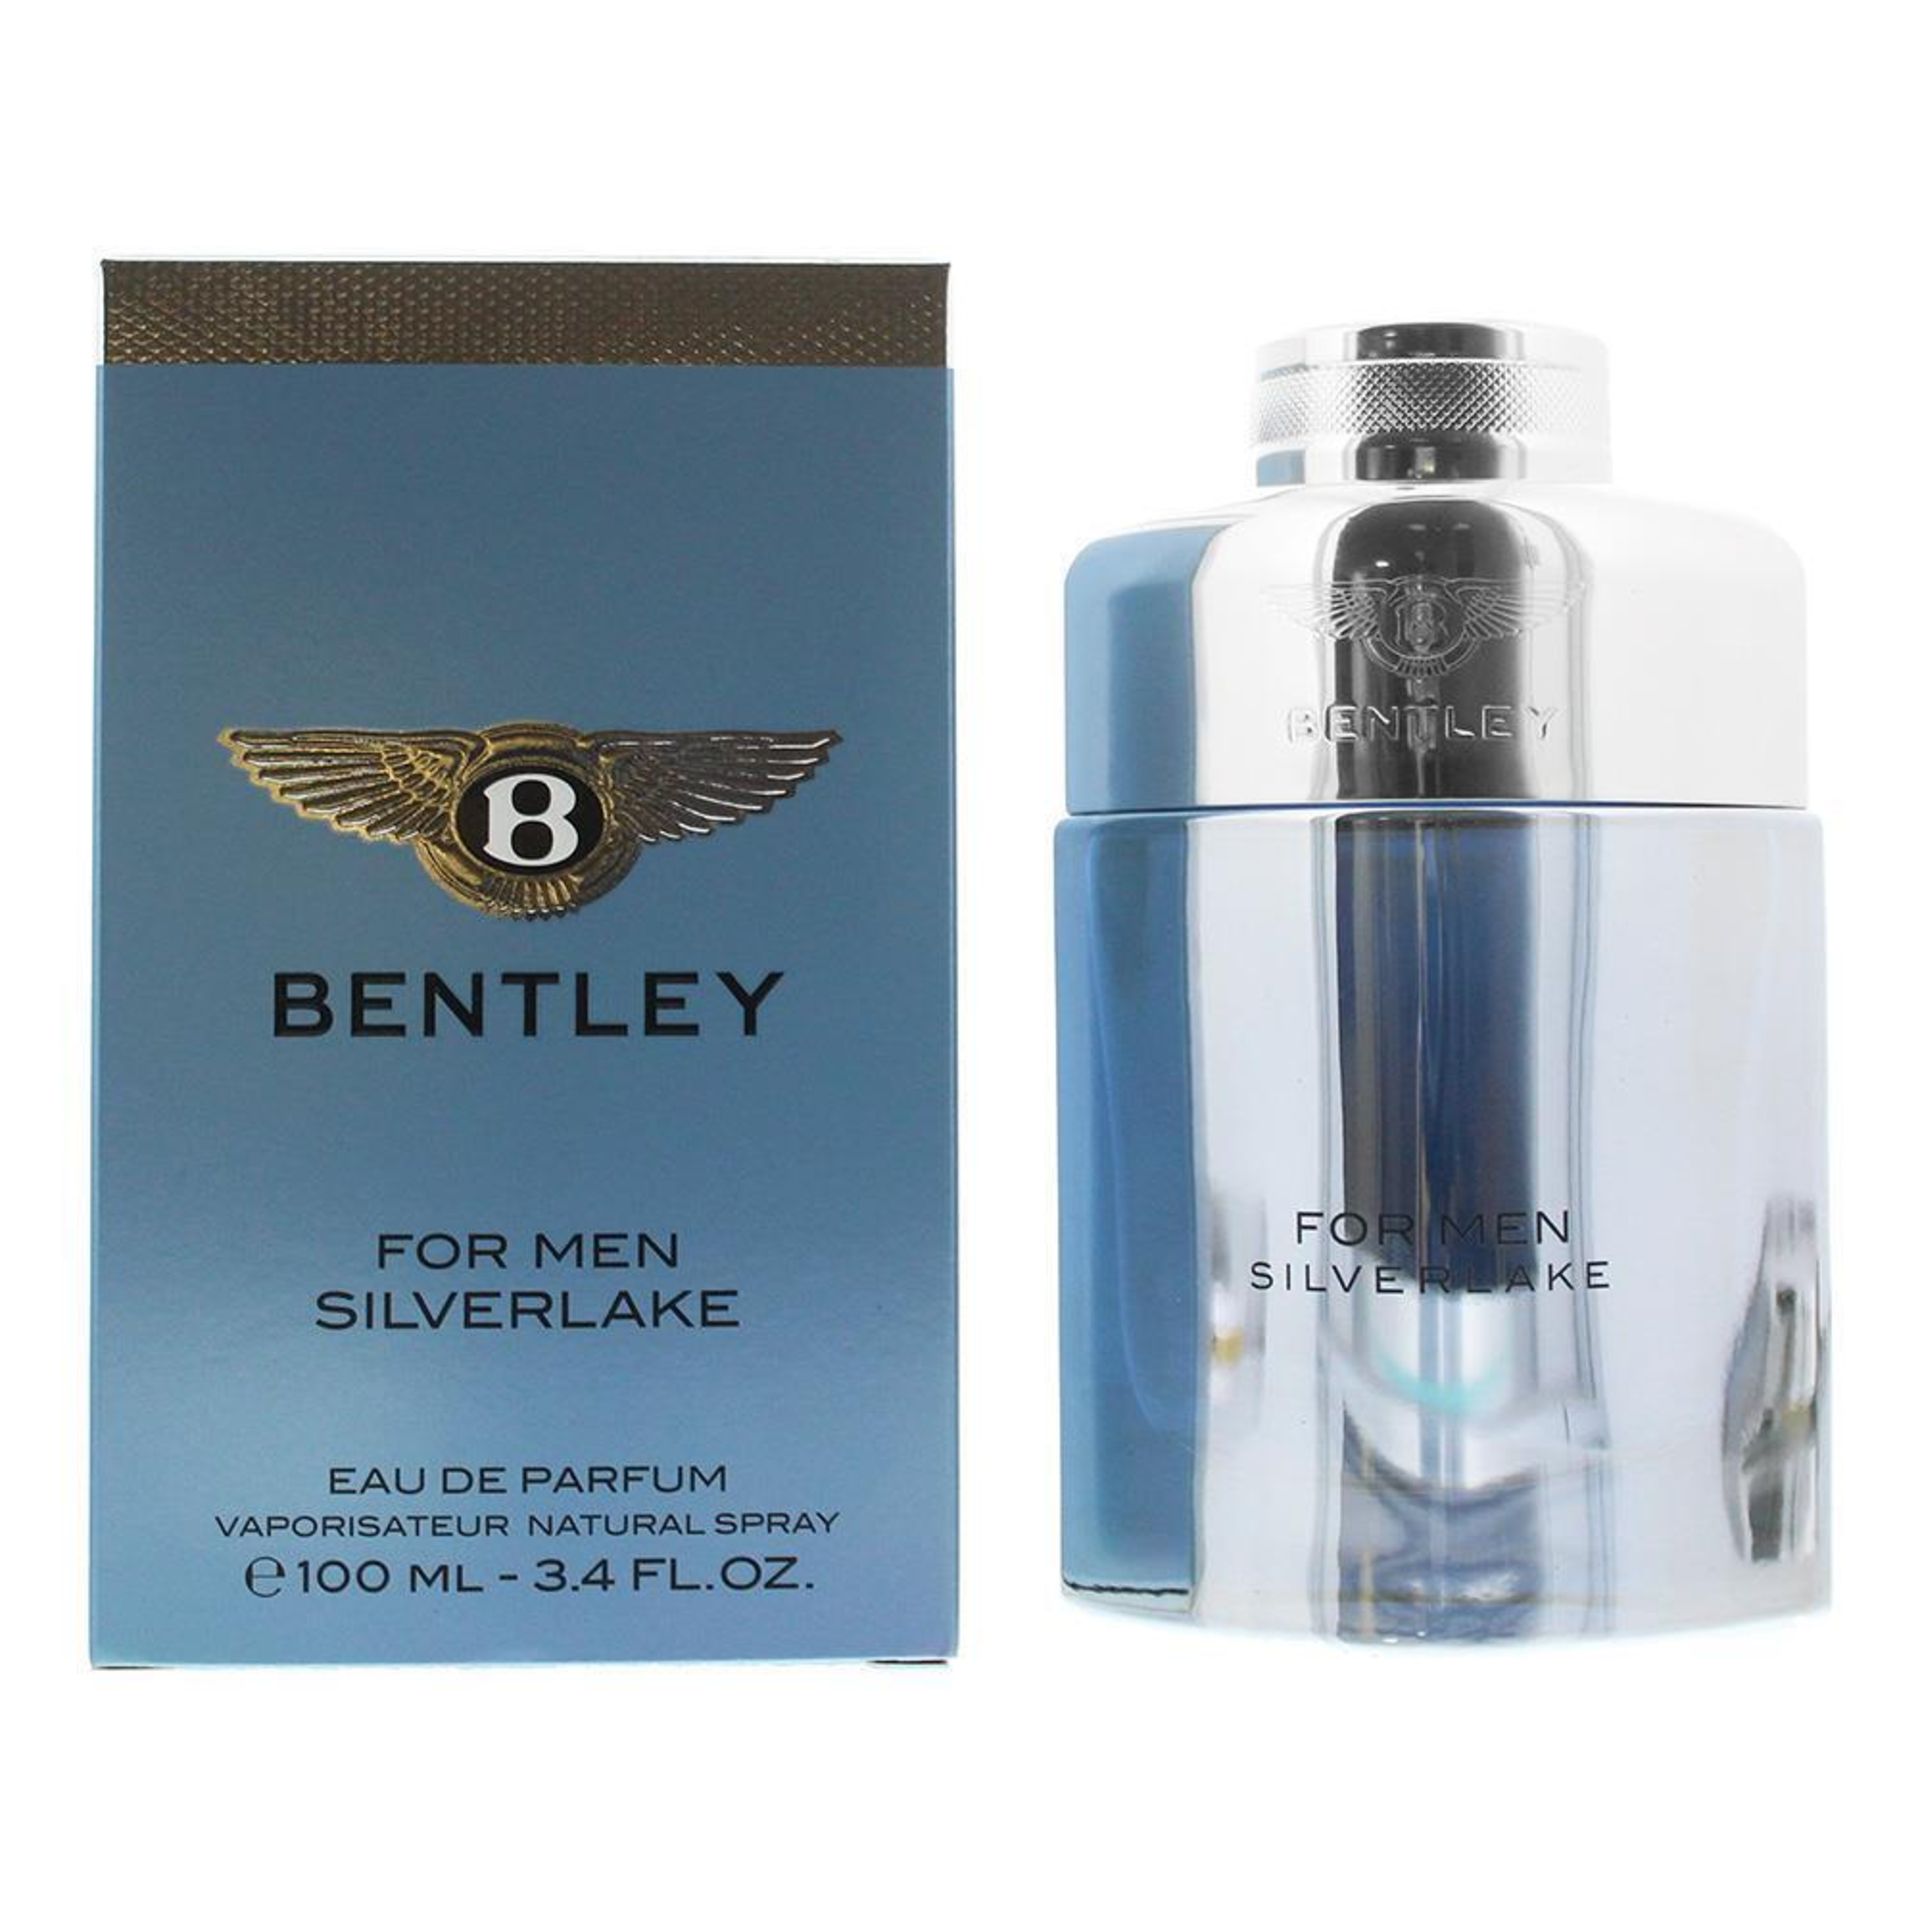 Bentley For Men Silverlake Eau de Parfum 100ml Spray - Image 3 of 6